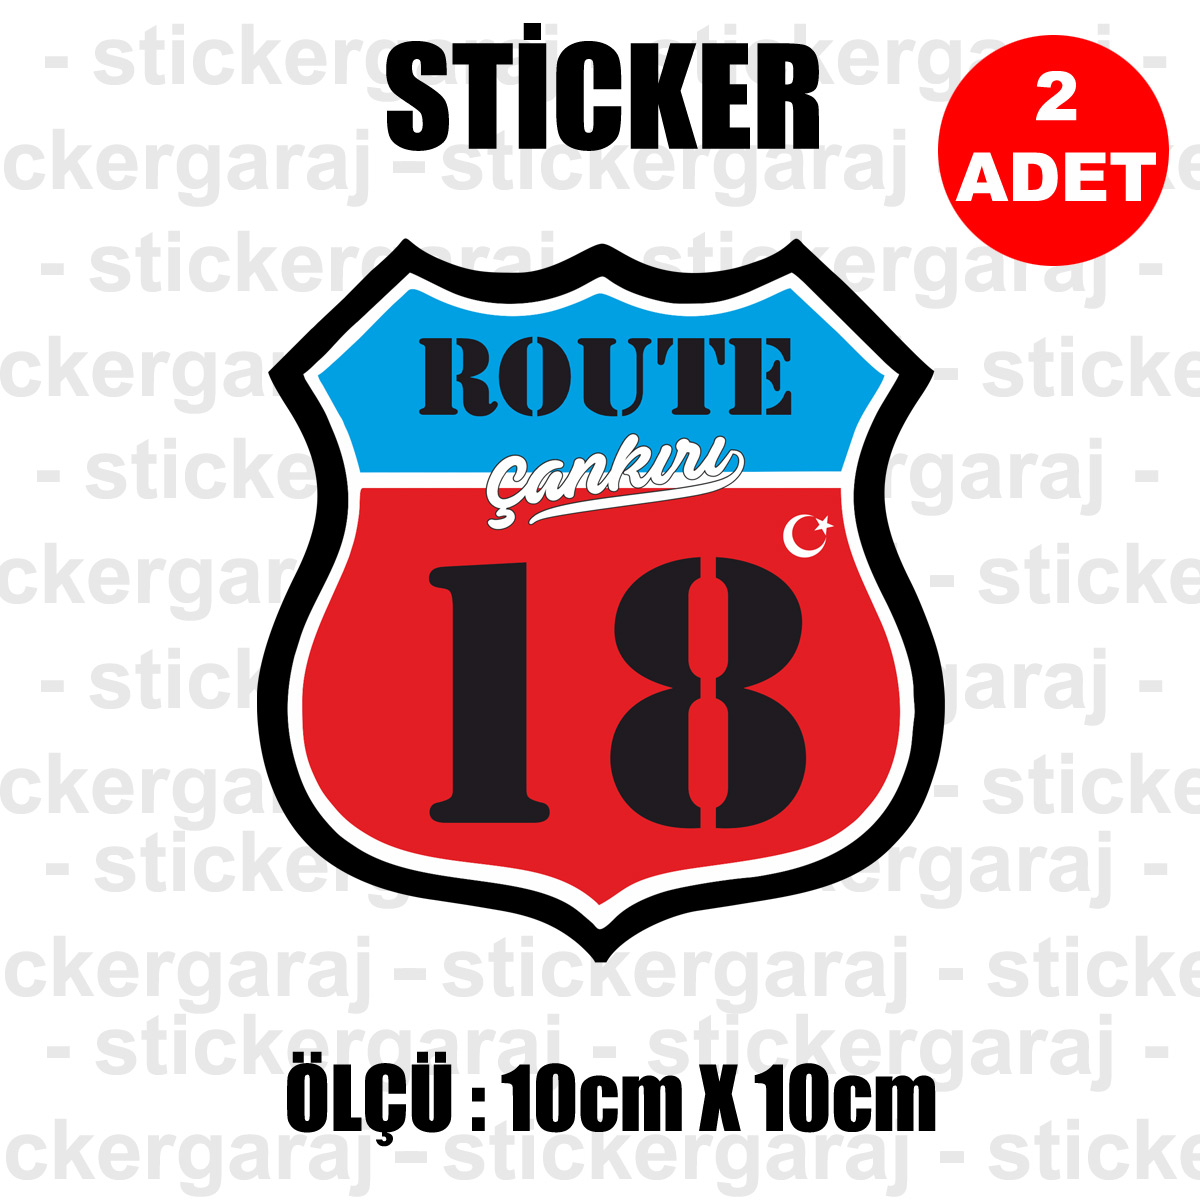 18 CANKIRI - 18 Çankırı Rota İl Kodu Sticker